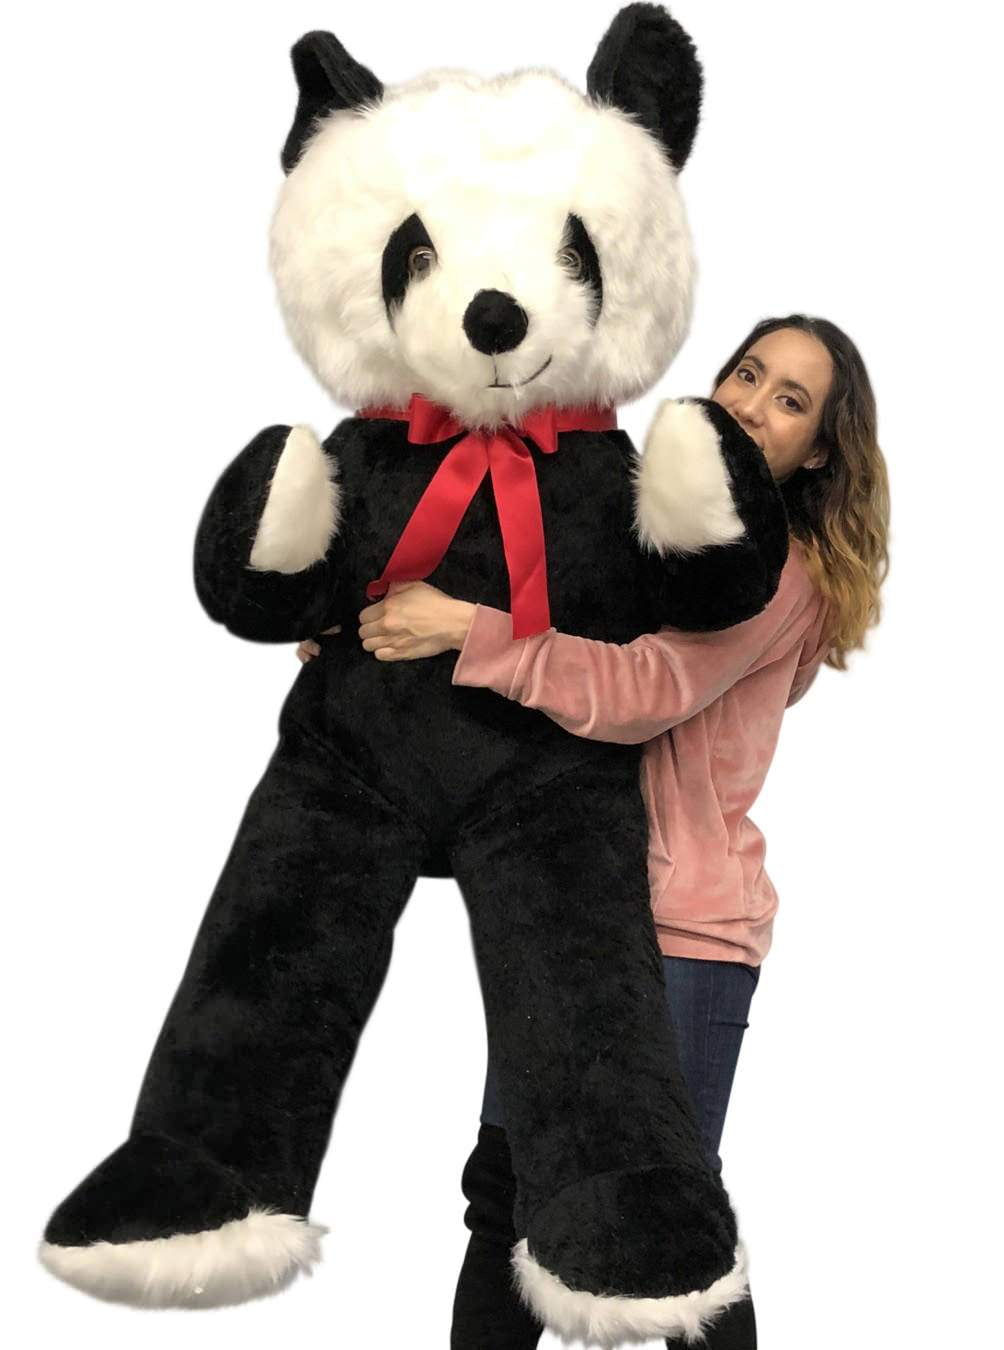 stuffed panda bear walmart